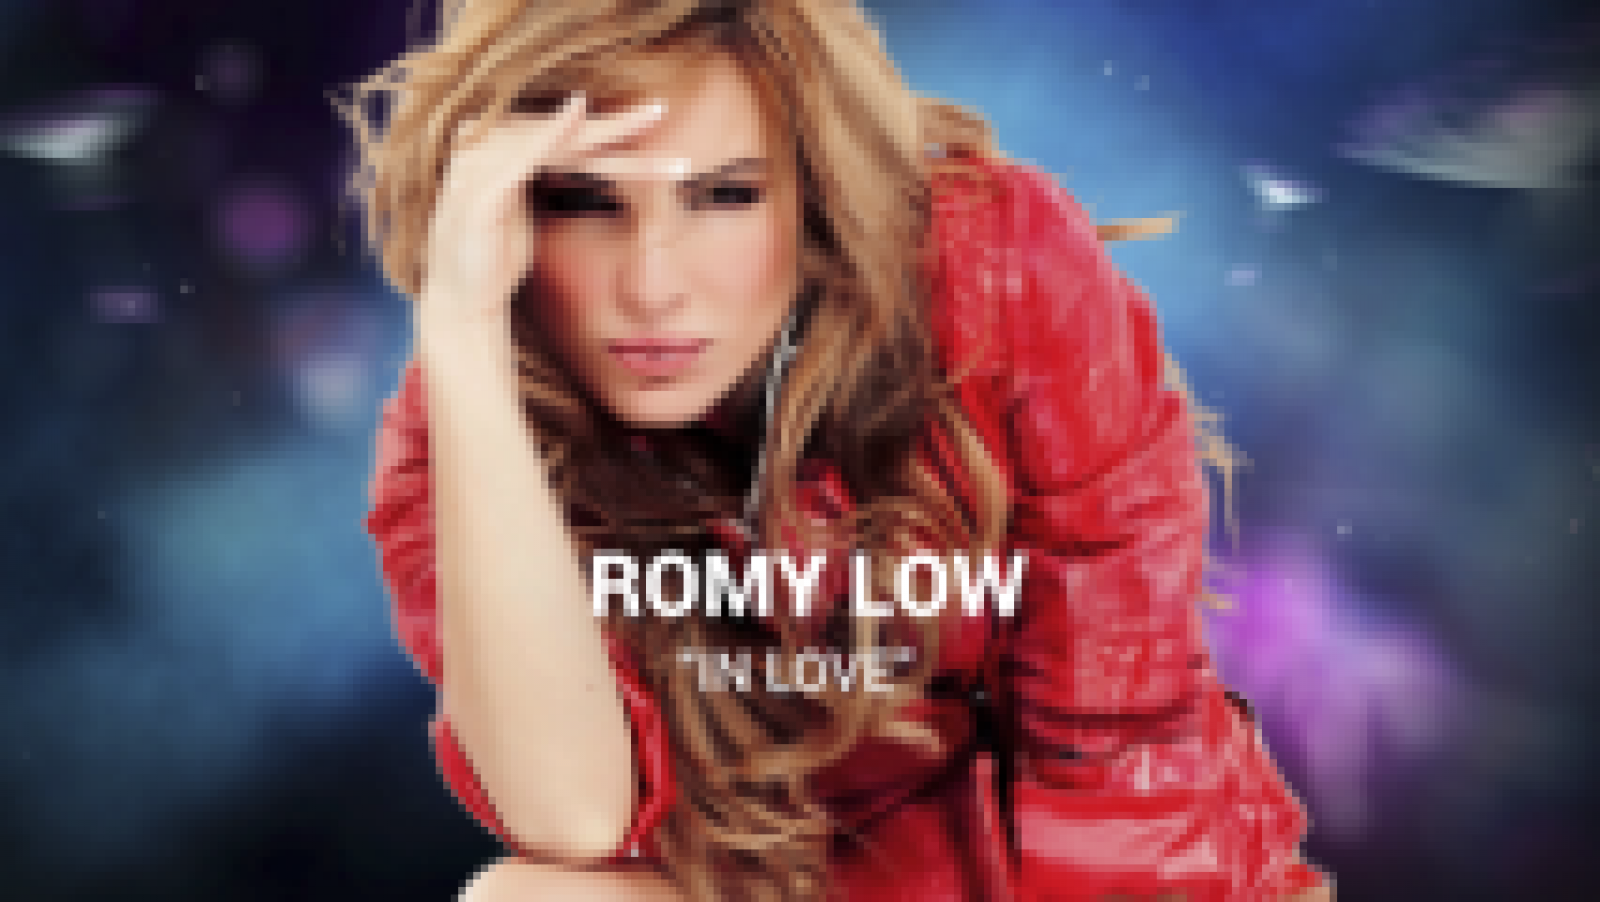 Eurovisión 2017 - Romy Low canta "In love"